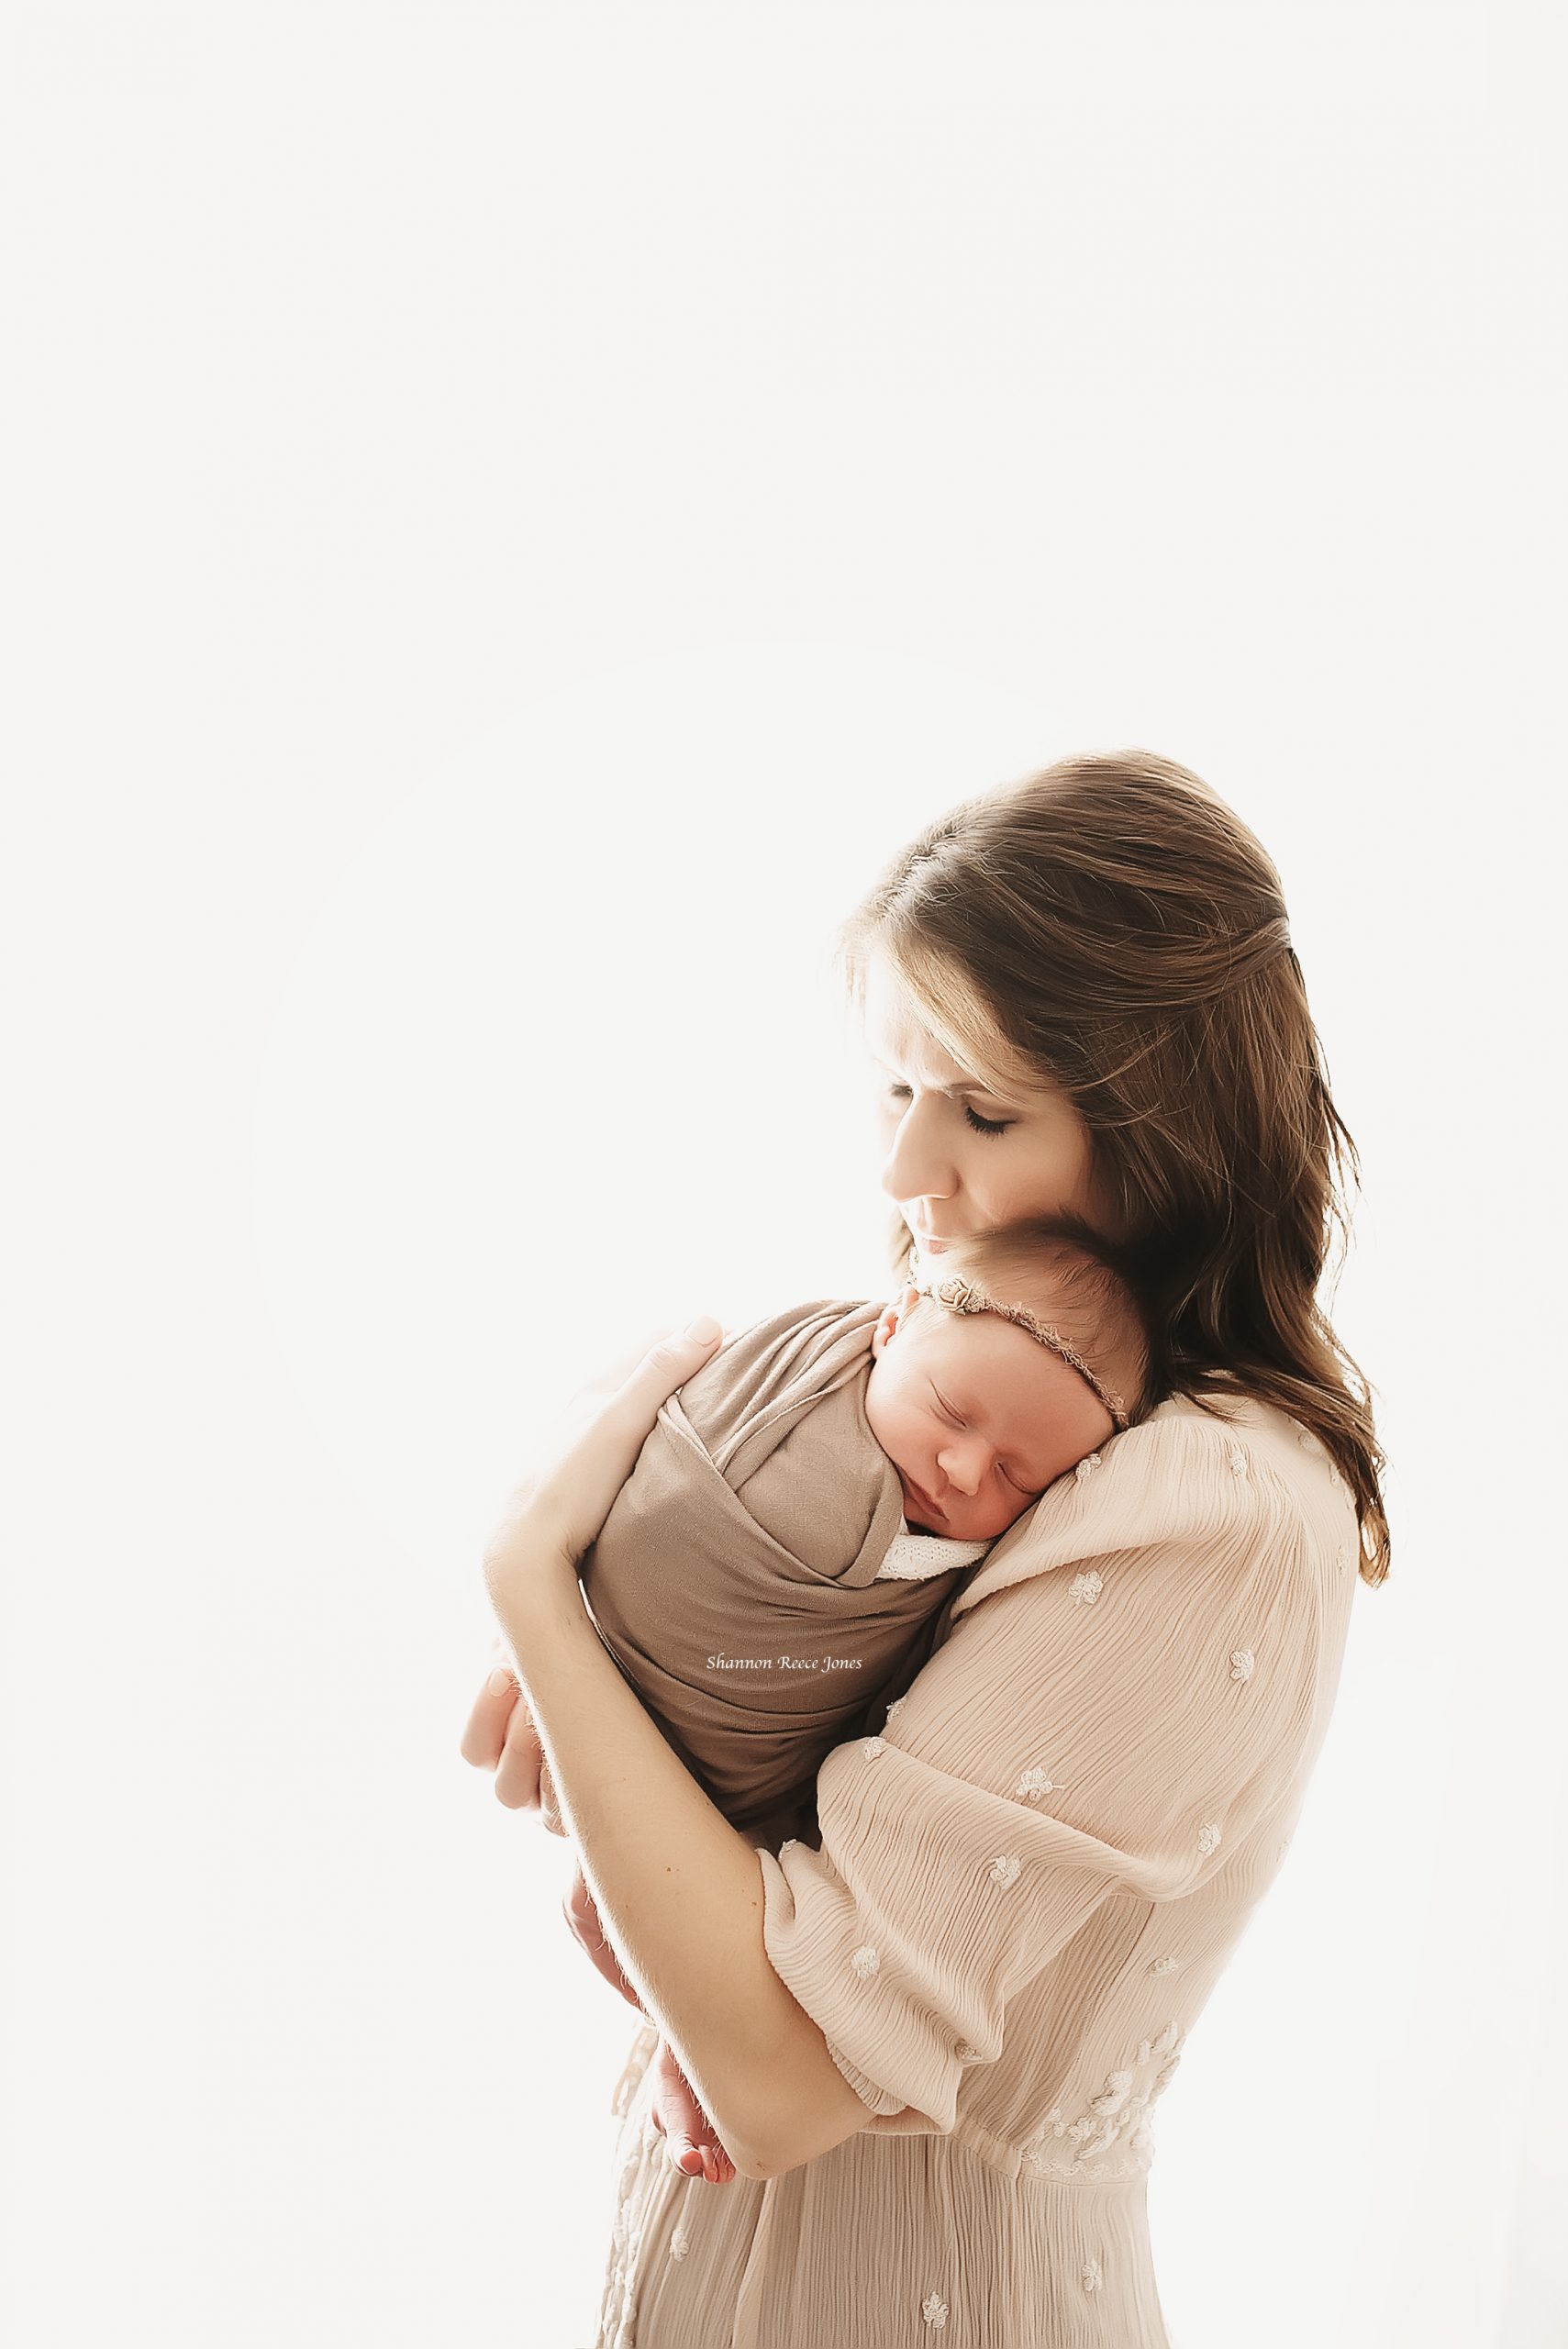 photo of woman holding newborn baby